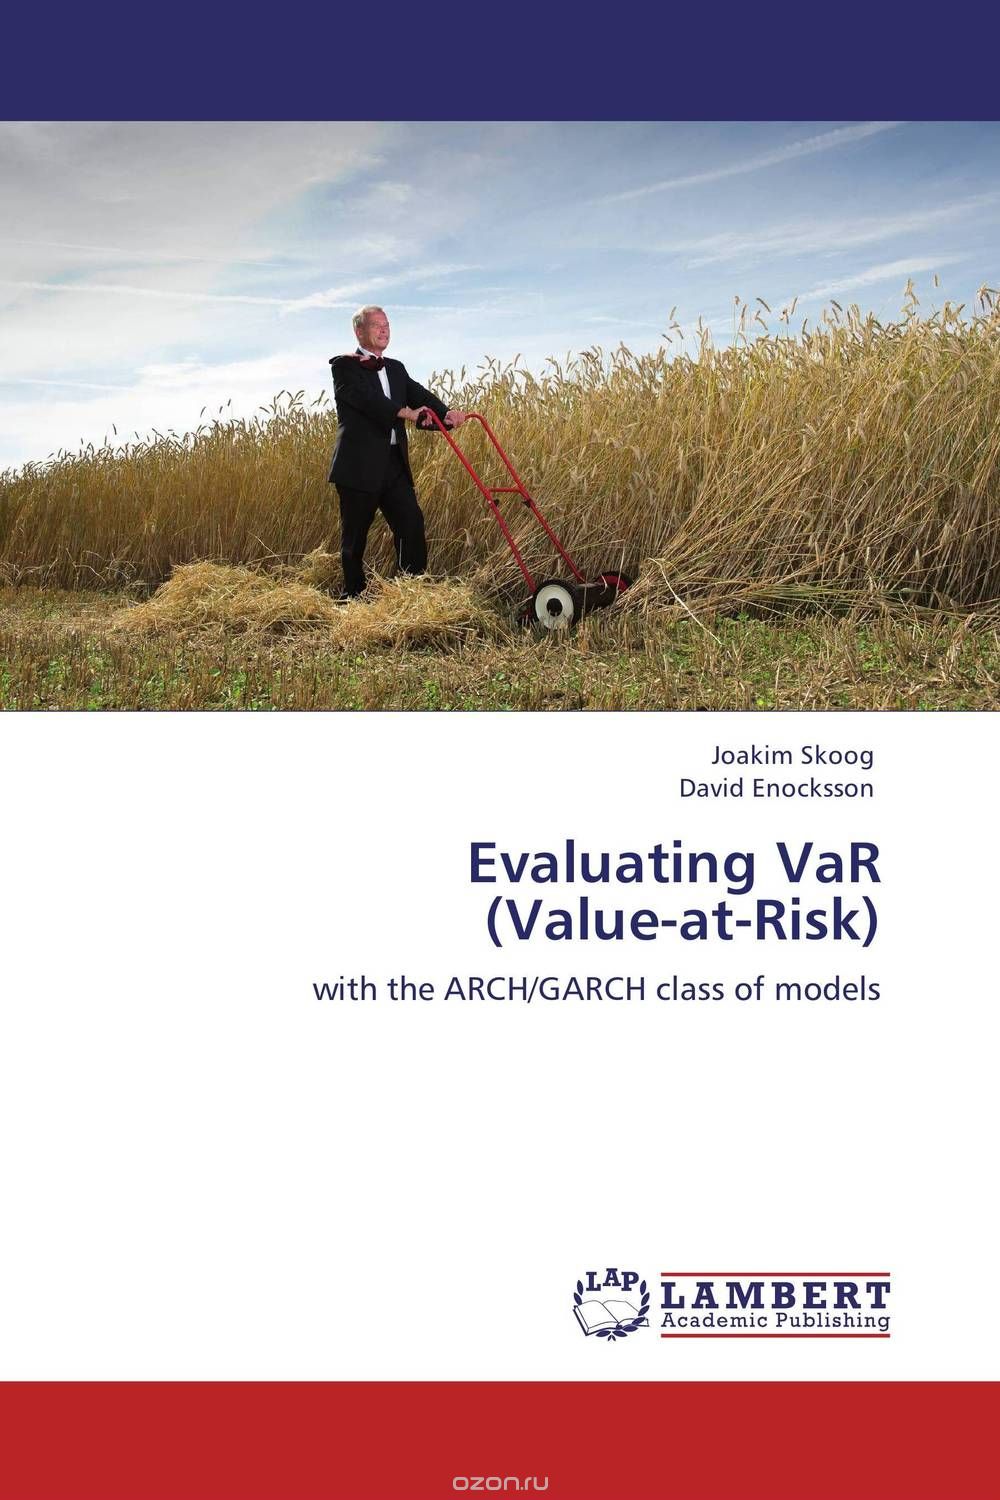 Скачать книгу "Evaluating VaR   (Value-at-Risk)"